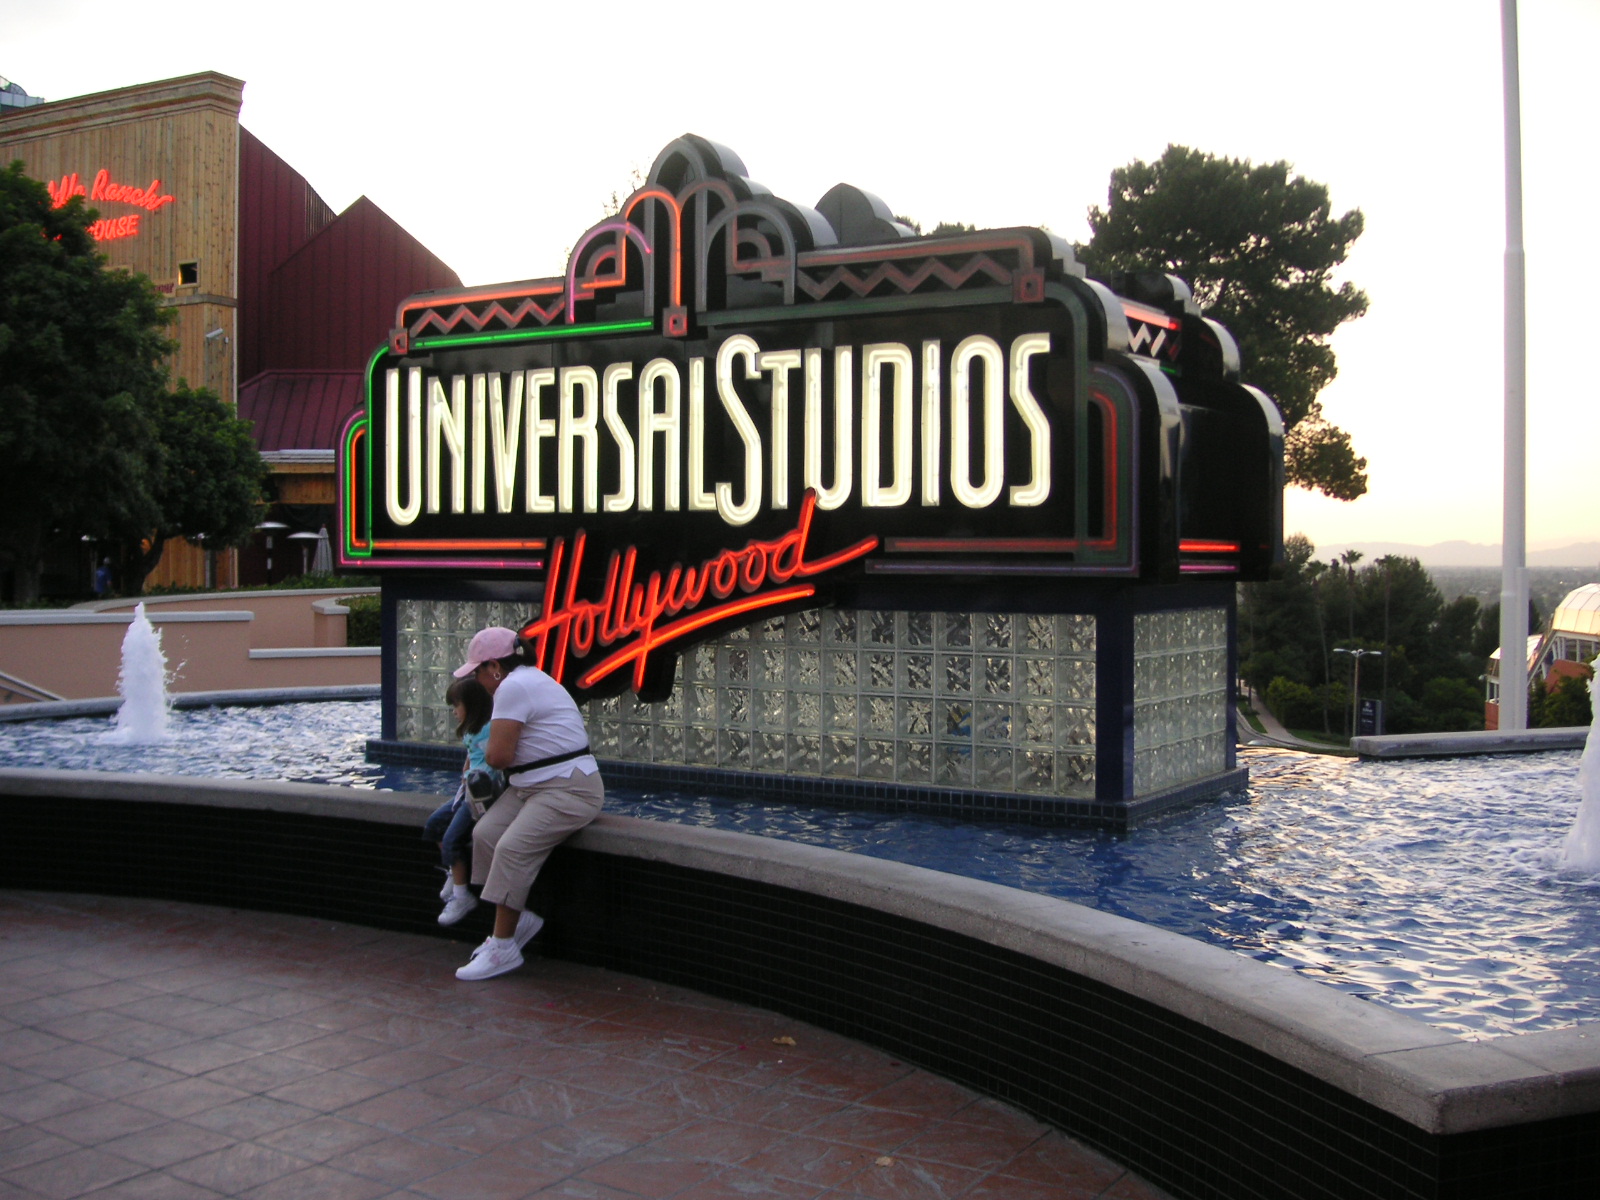 Jason's trip to Universal Studios